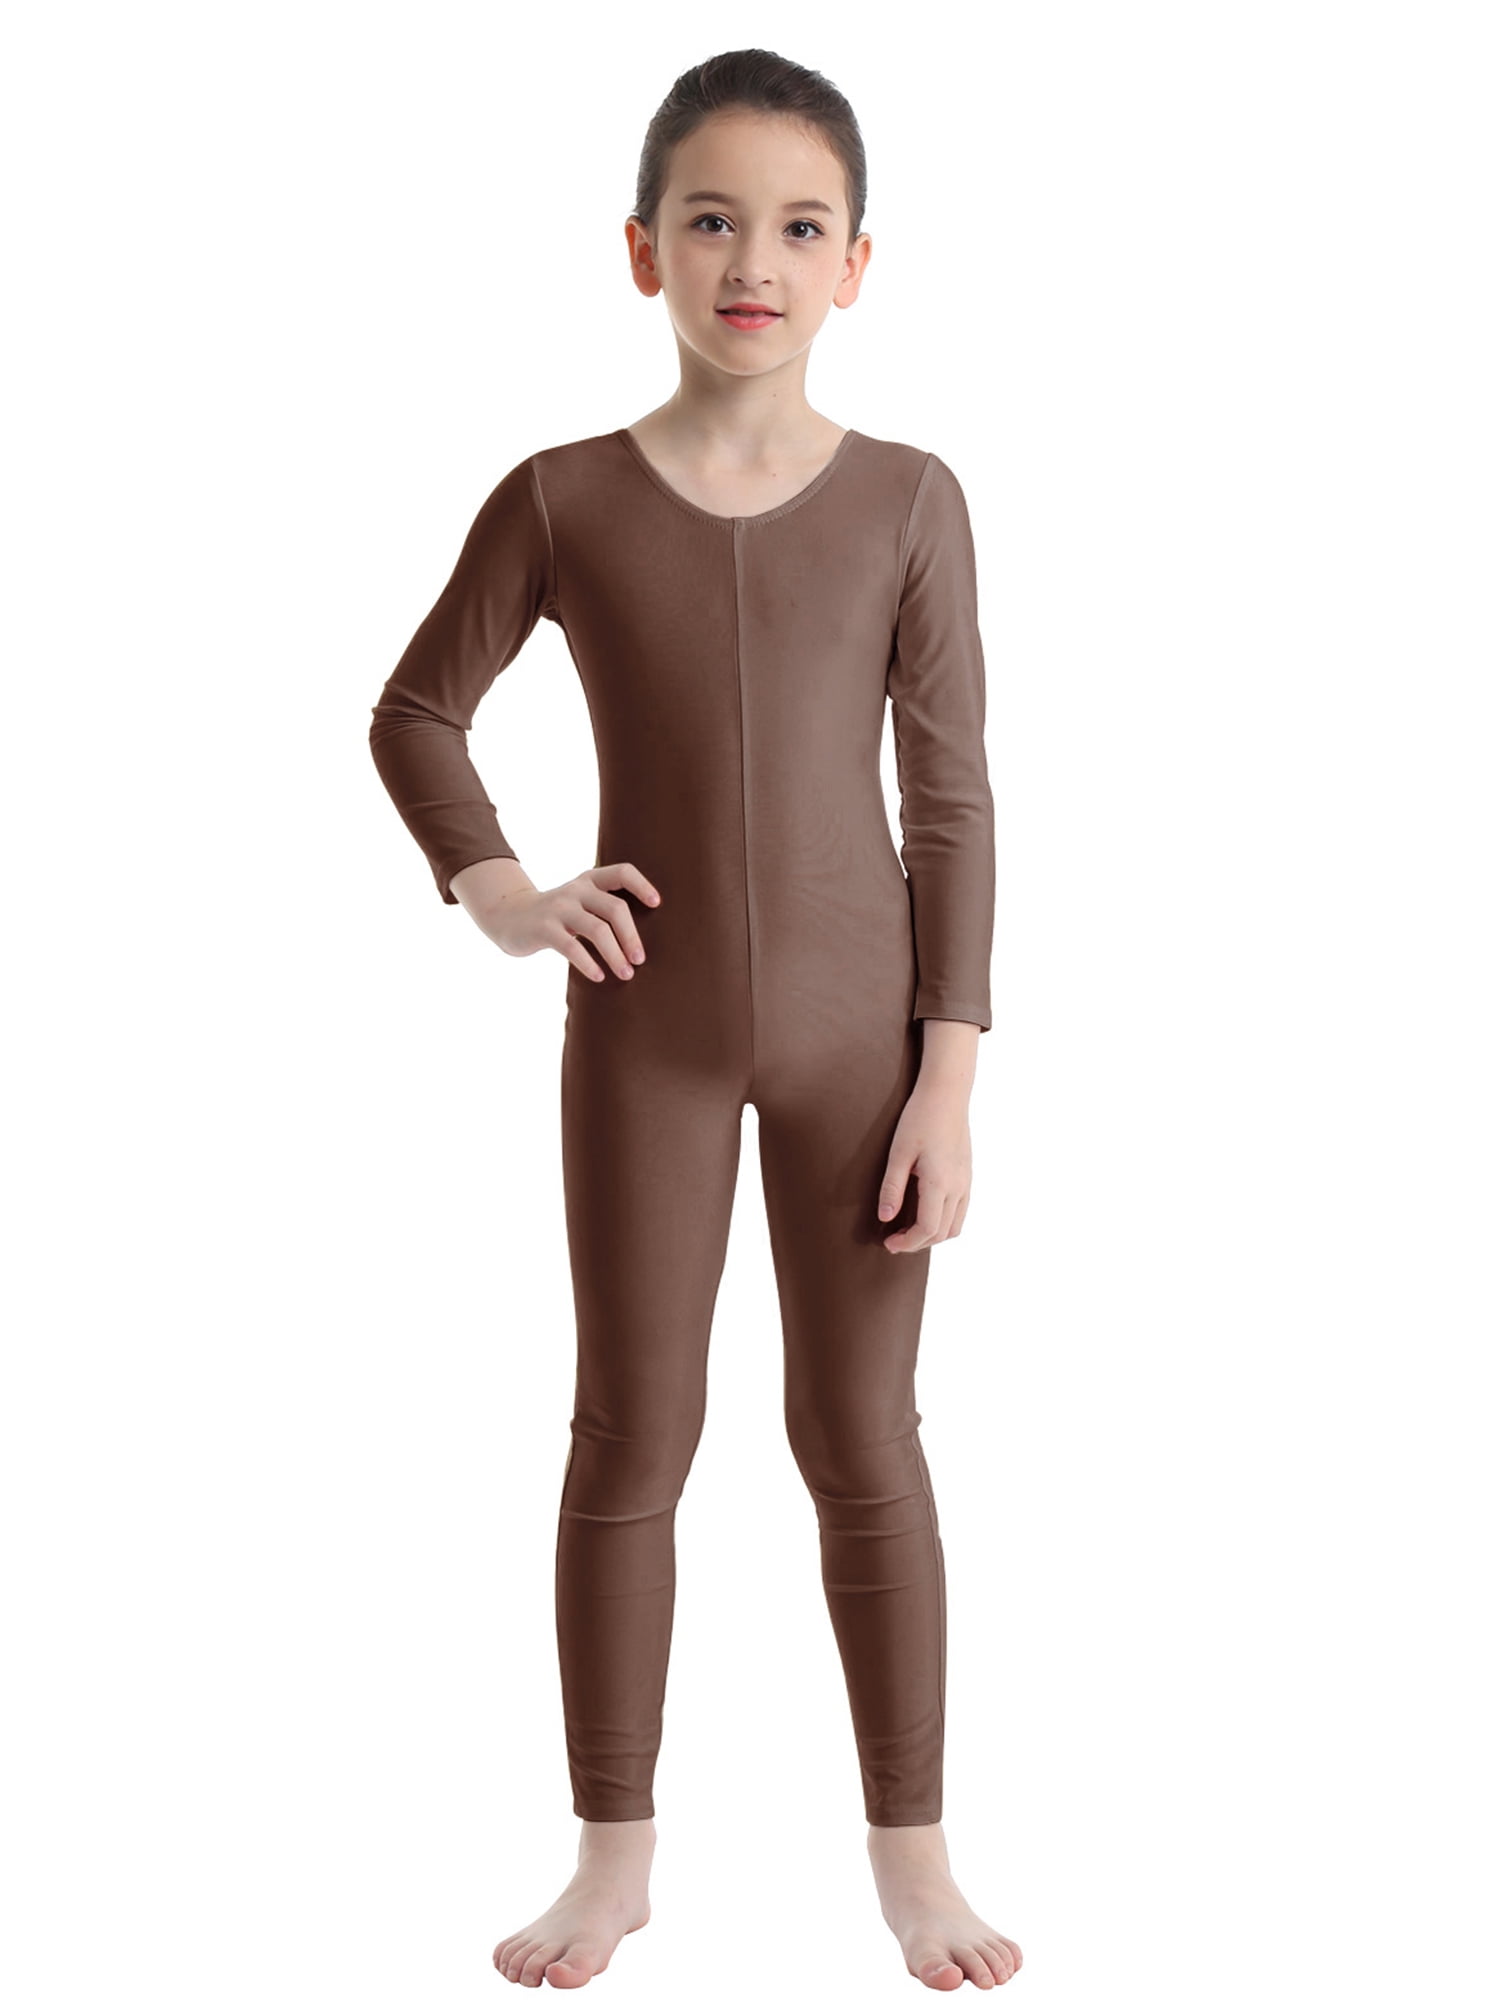 DPOIS Kids Girls Long Sleeve Unitard Leotard Jumpsuit Full Length Bodysuit  Brown 11-12